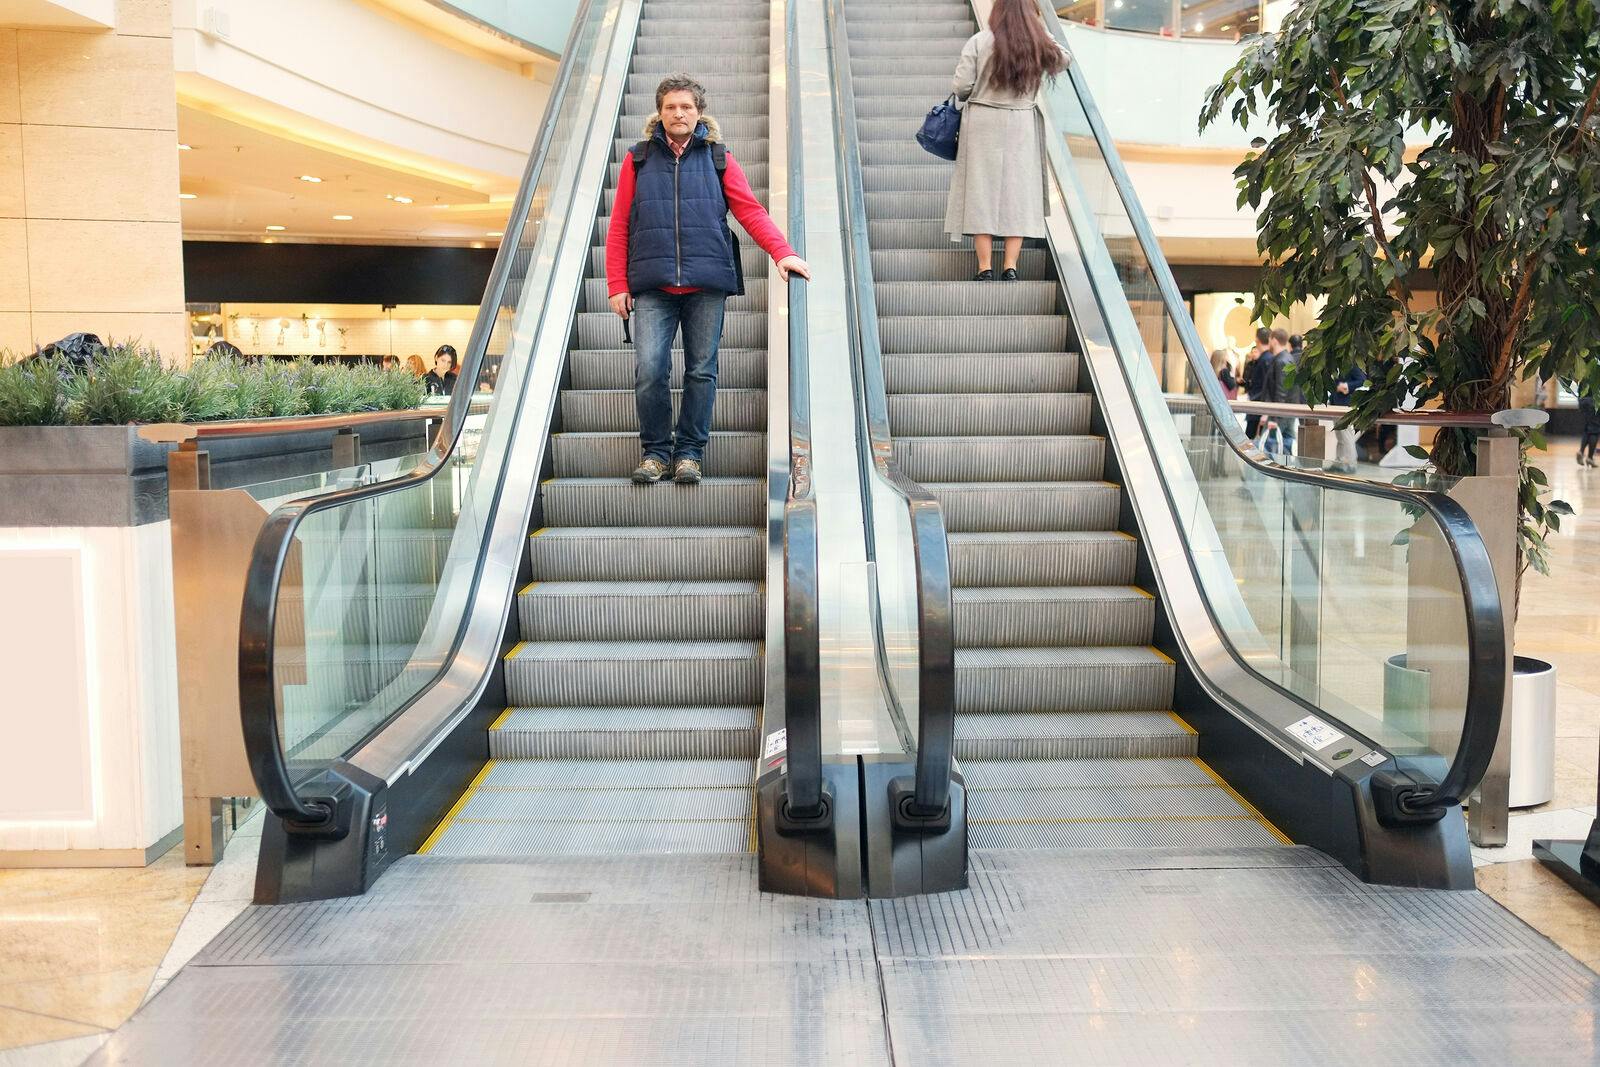 elevating-people-riding-escalator-safety-medium.jpg